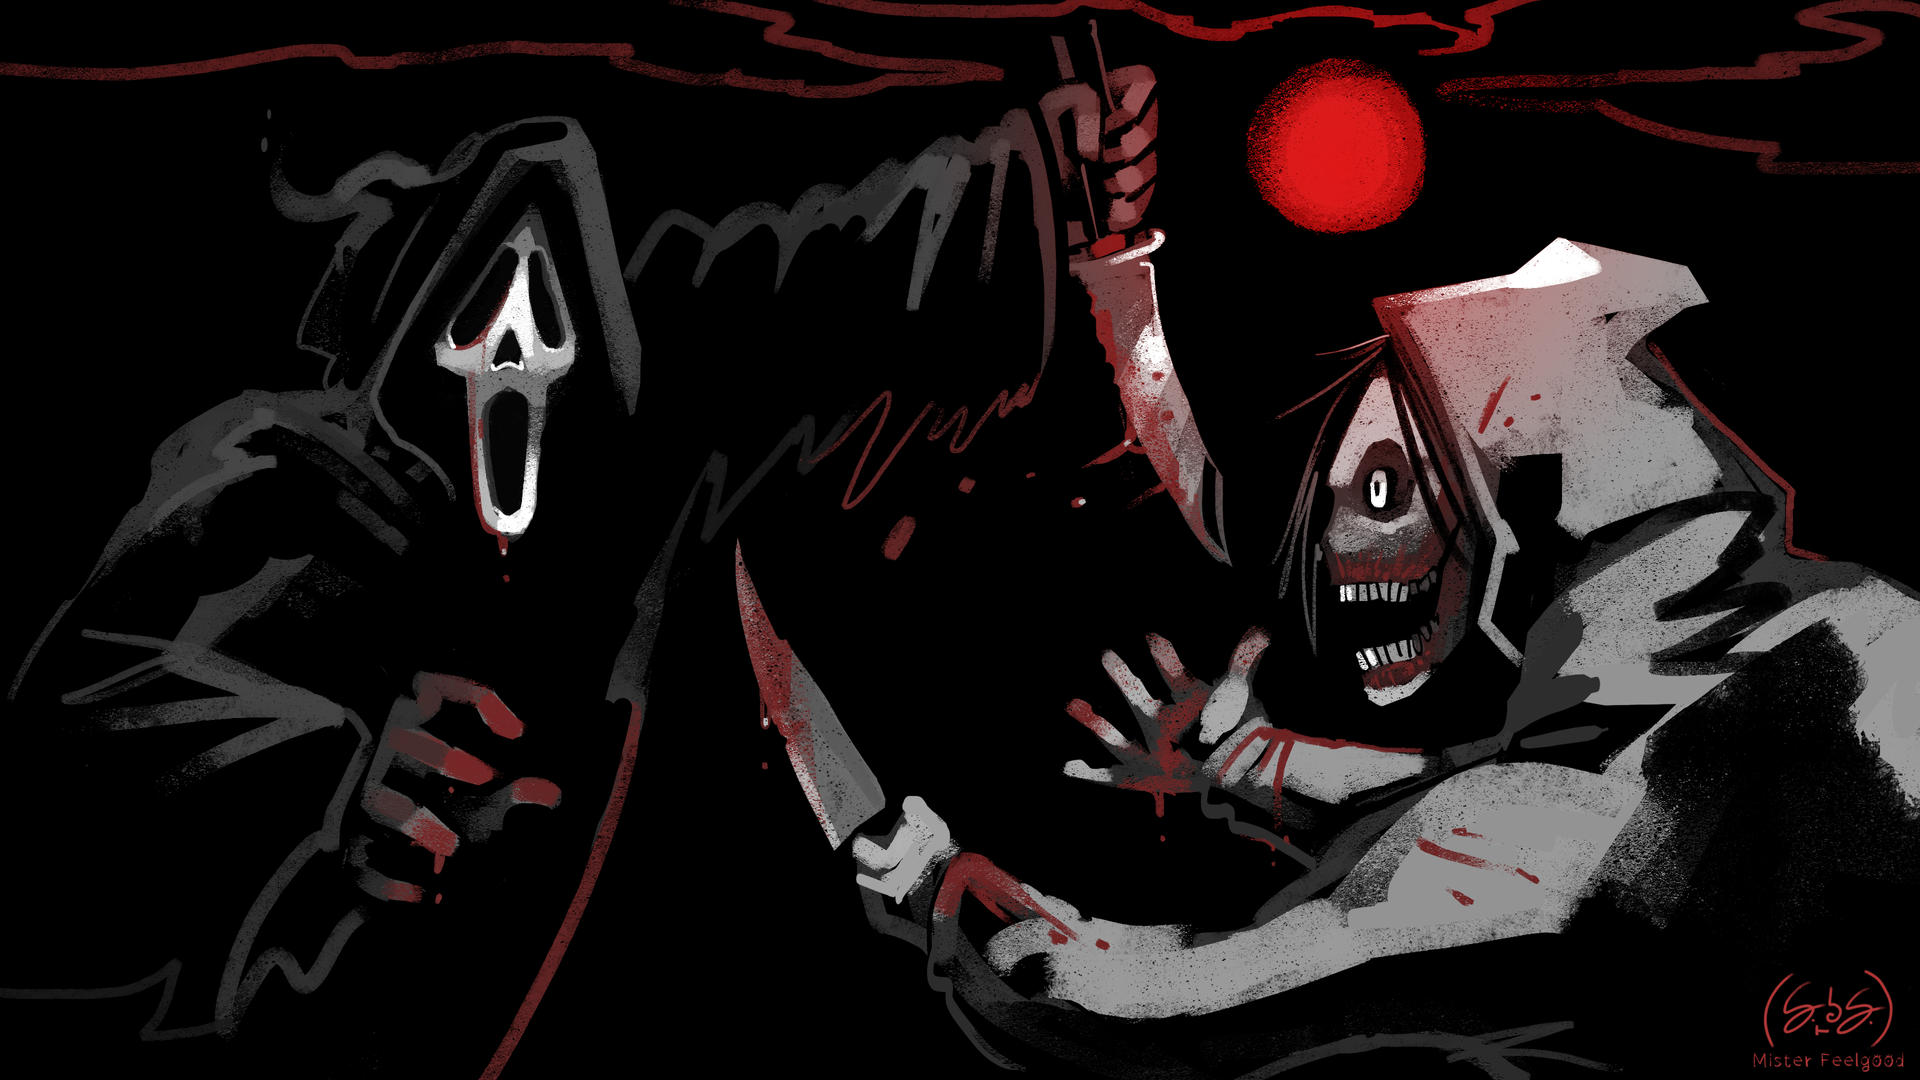 Jeff The Killer- Bedtime Scares - Wicked Horror